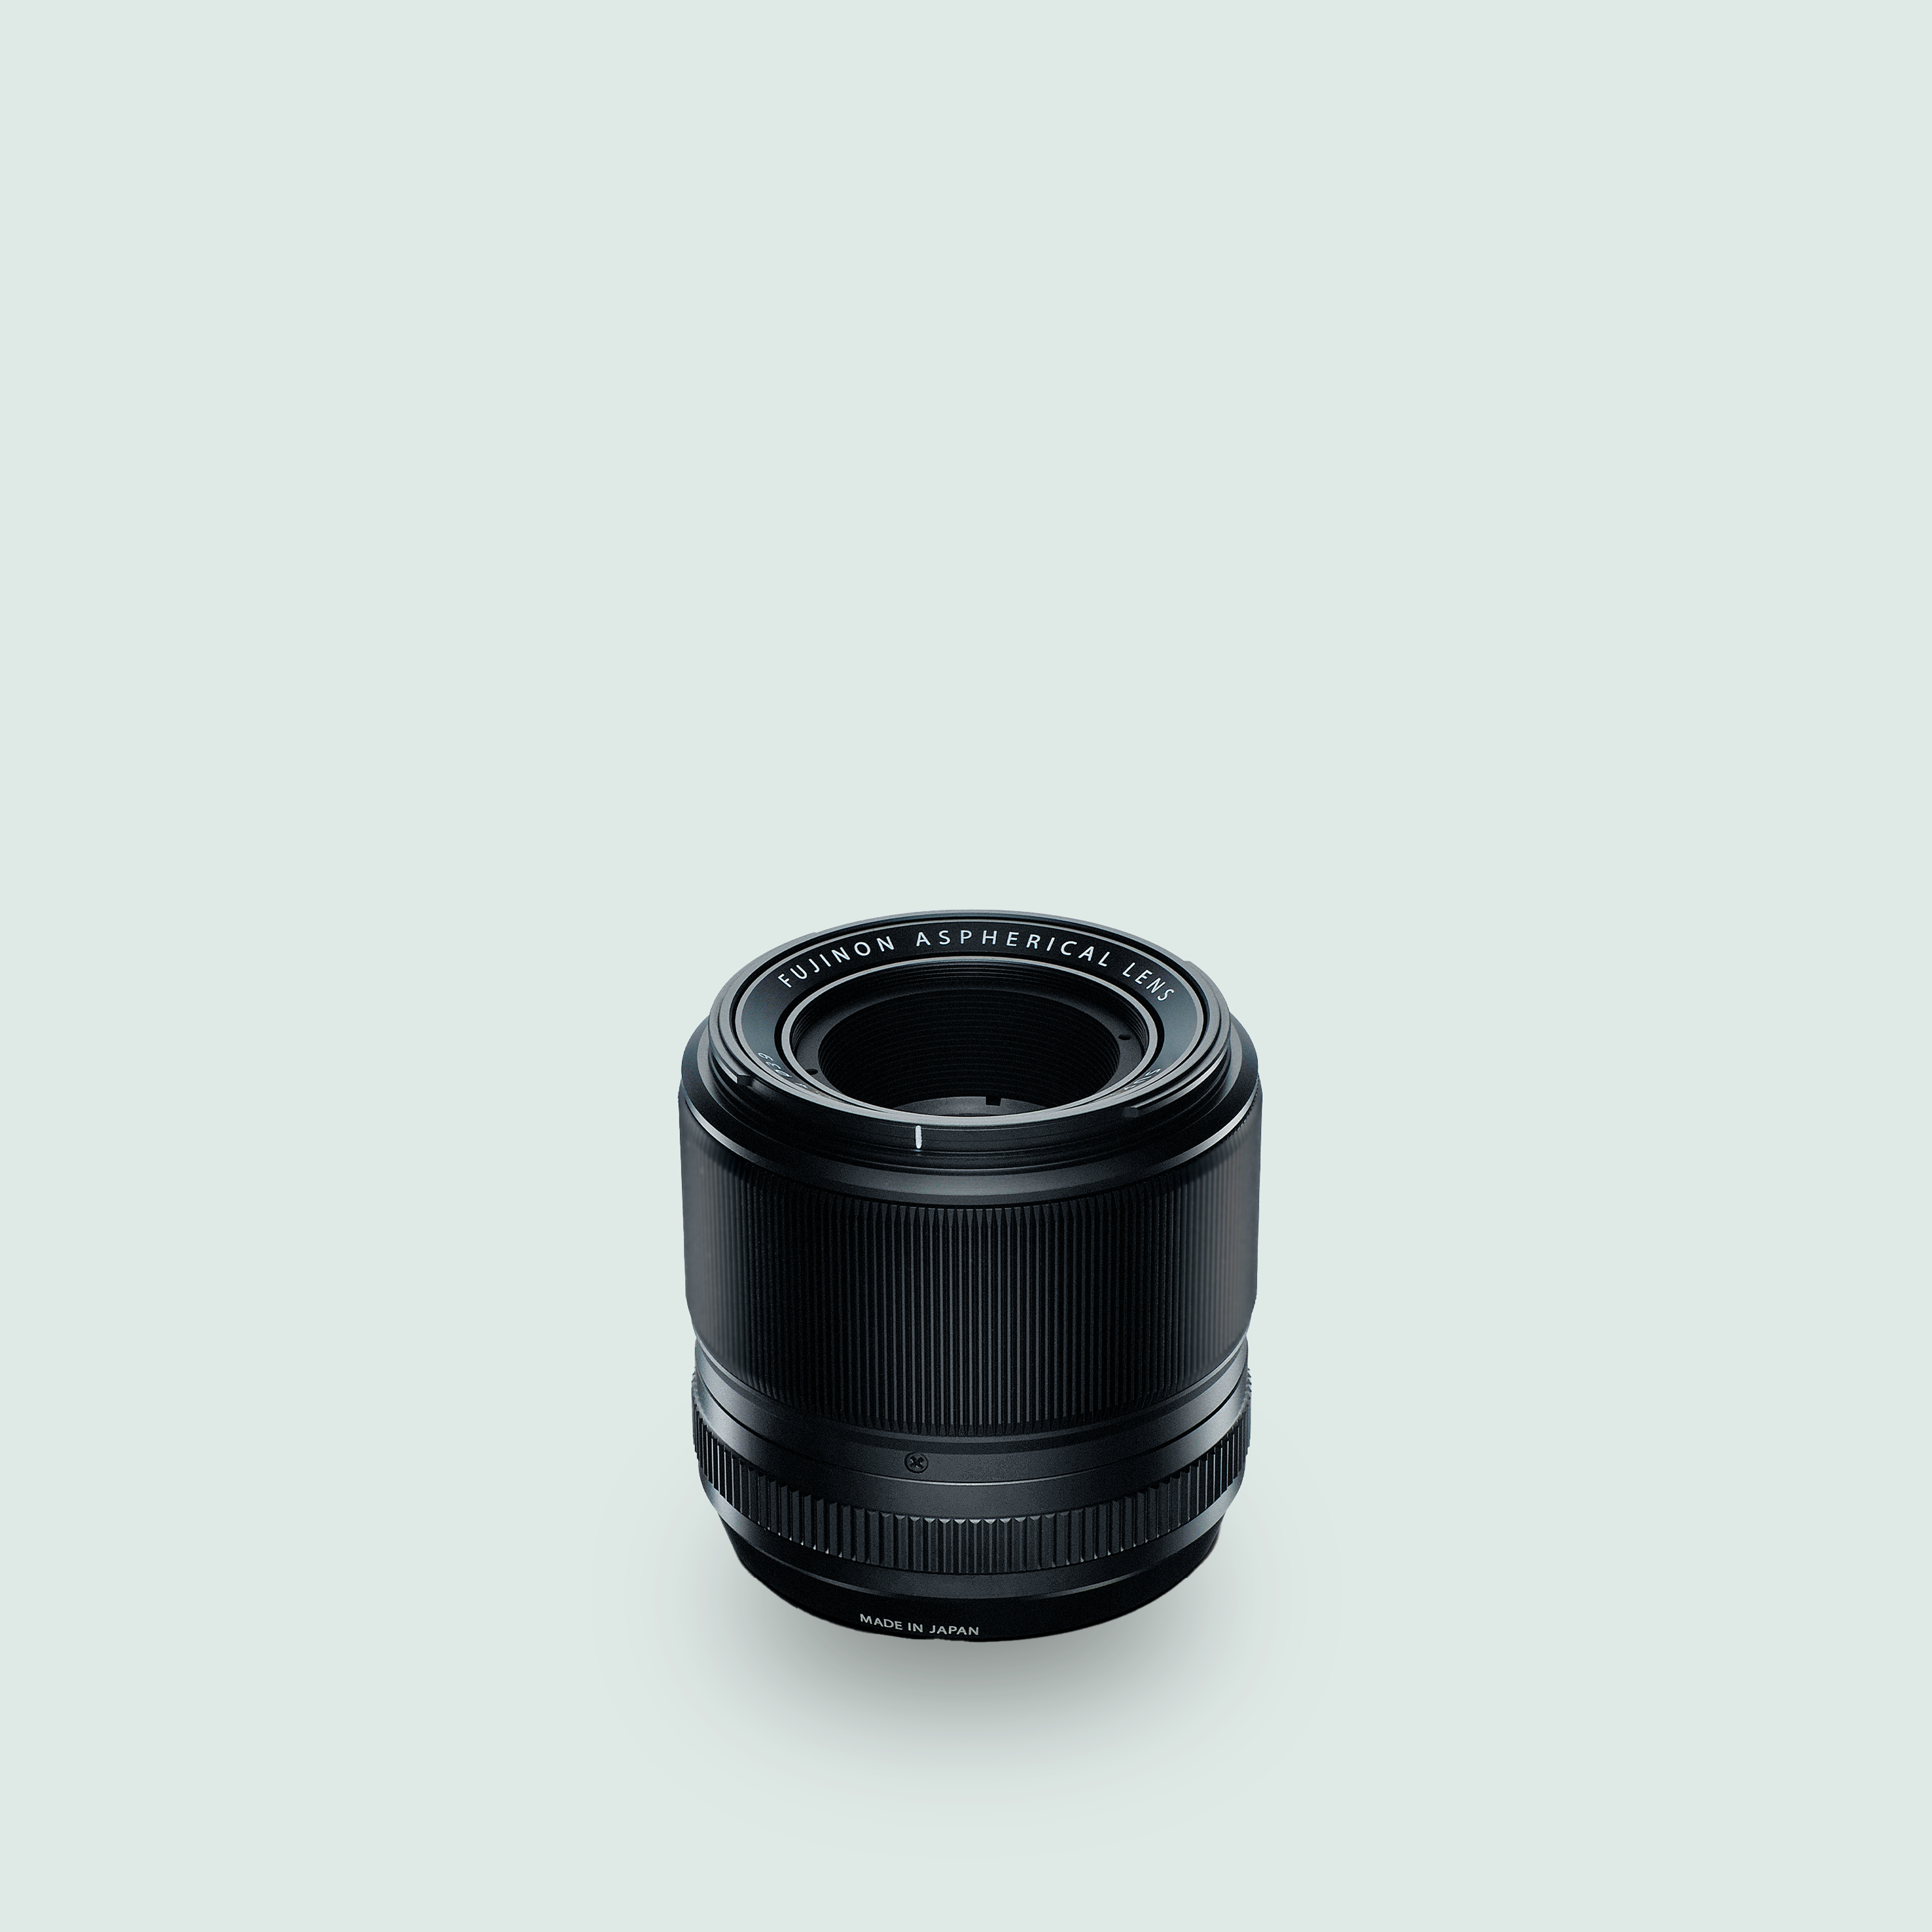 XF 60mm F2.4 R Macro Lens | Fujifilm AU House of Photography